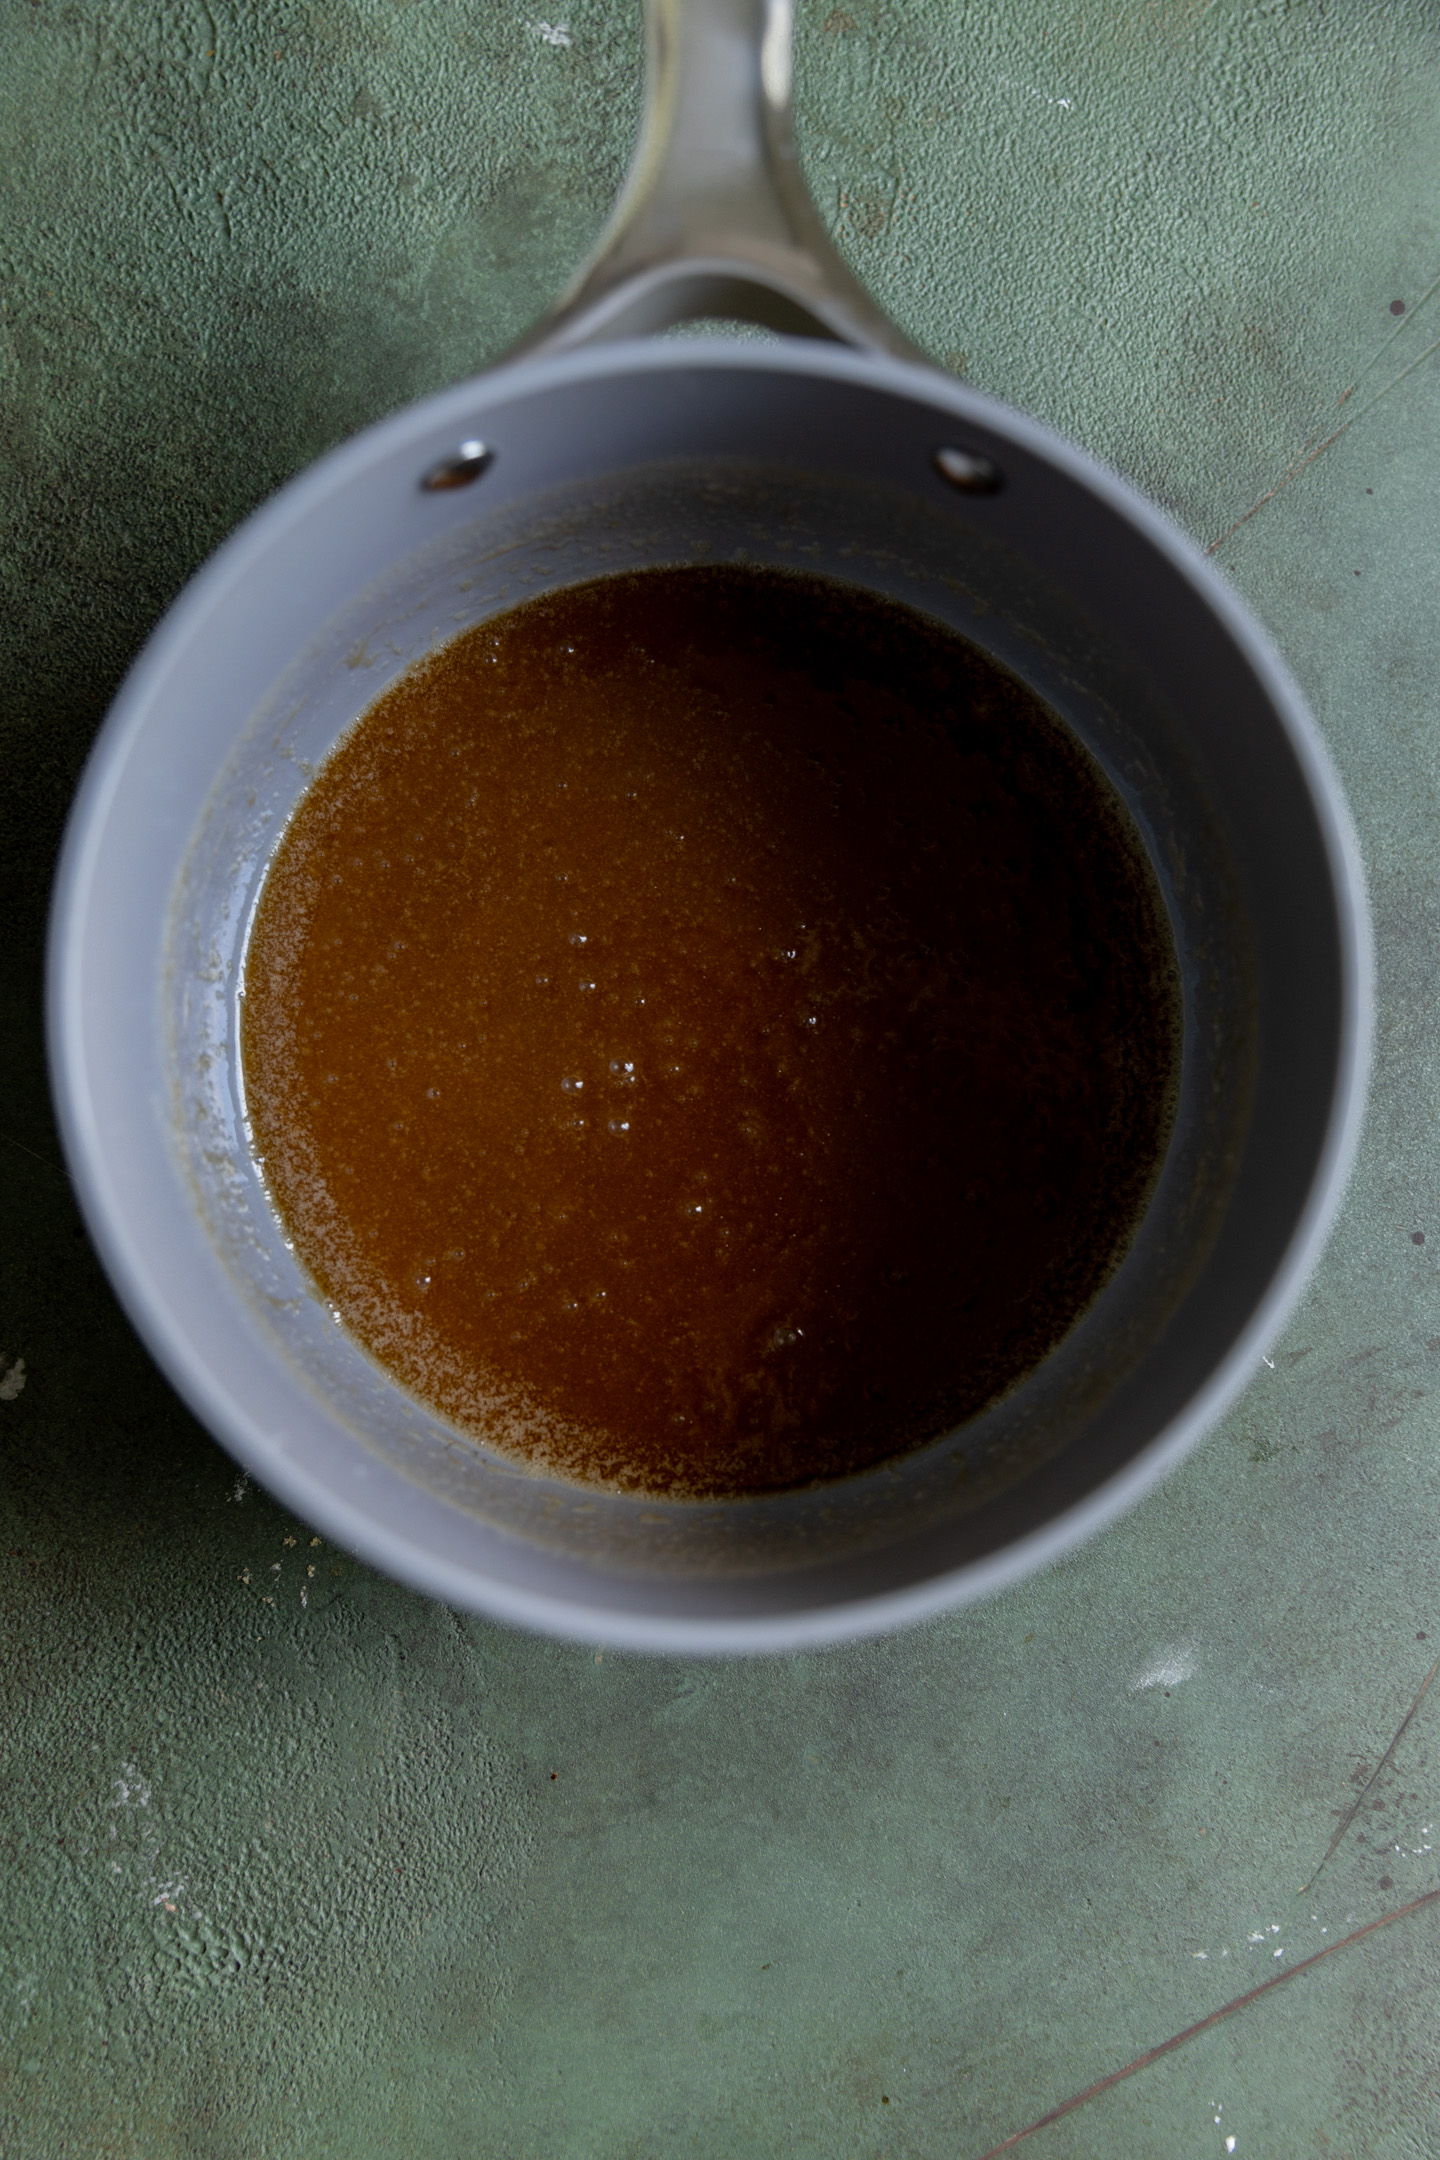 Caramel icing in a saucepan.